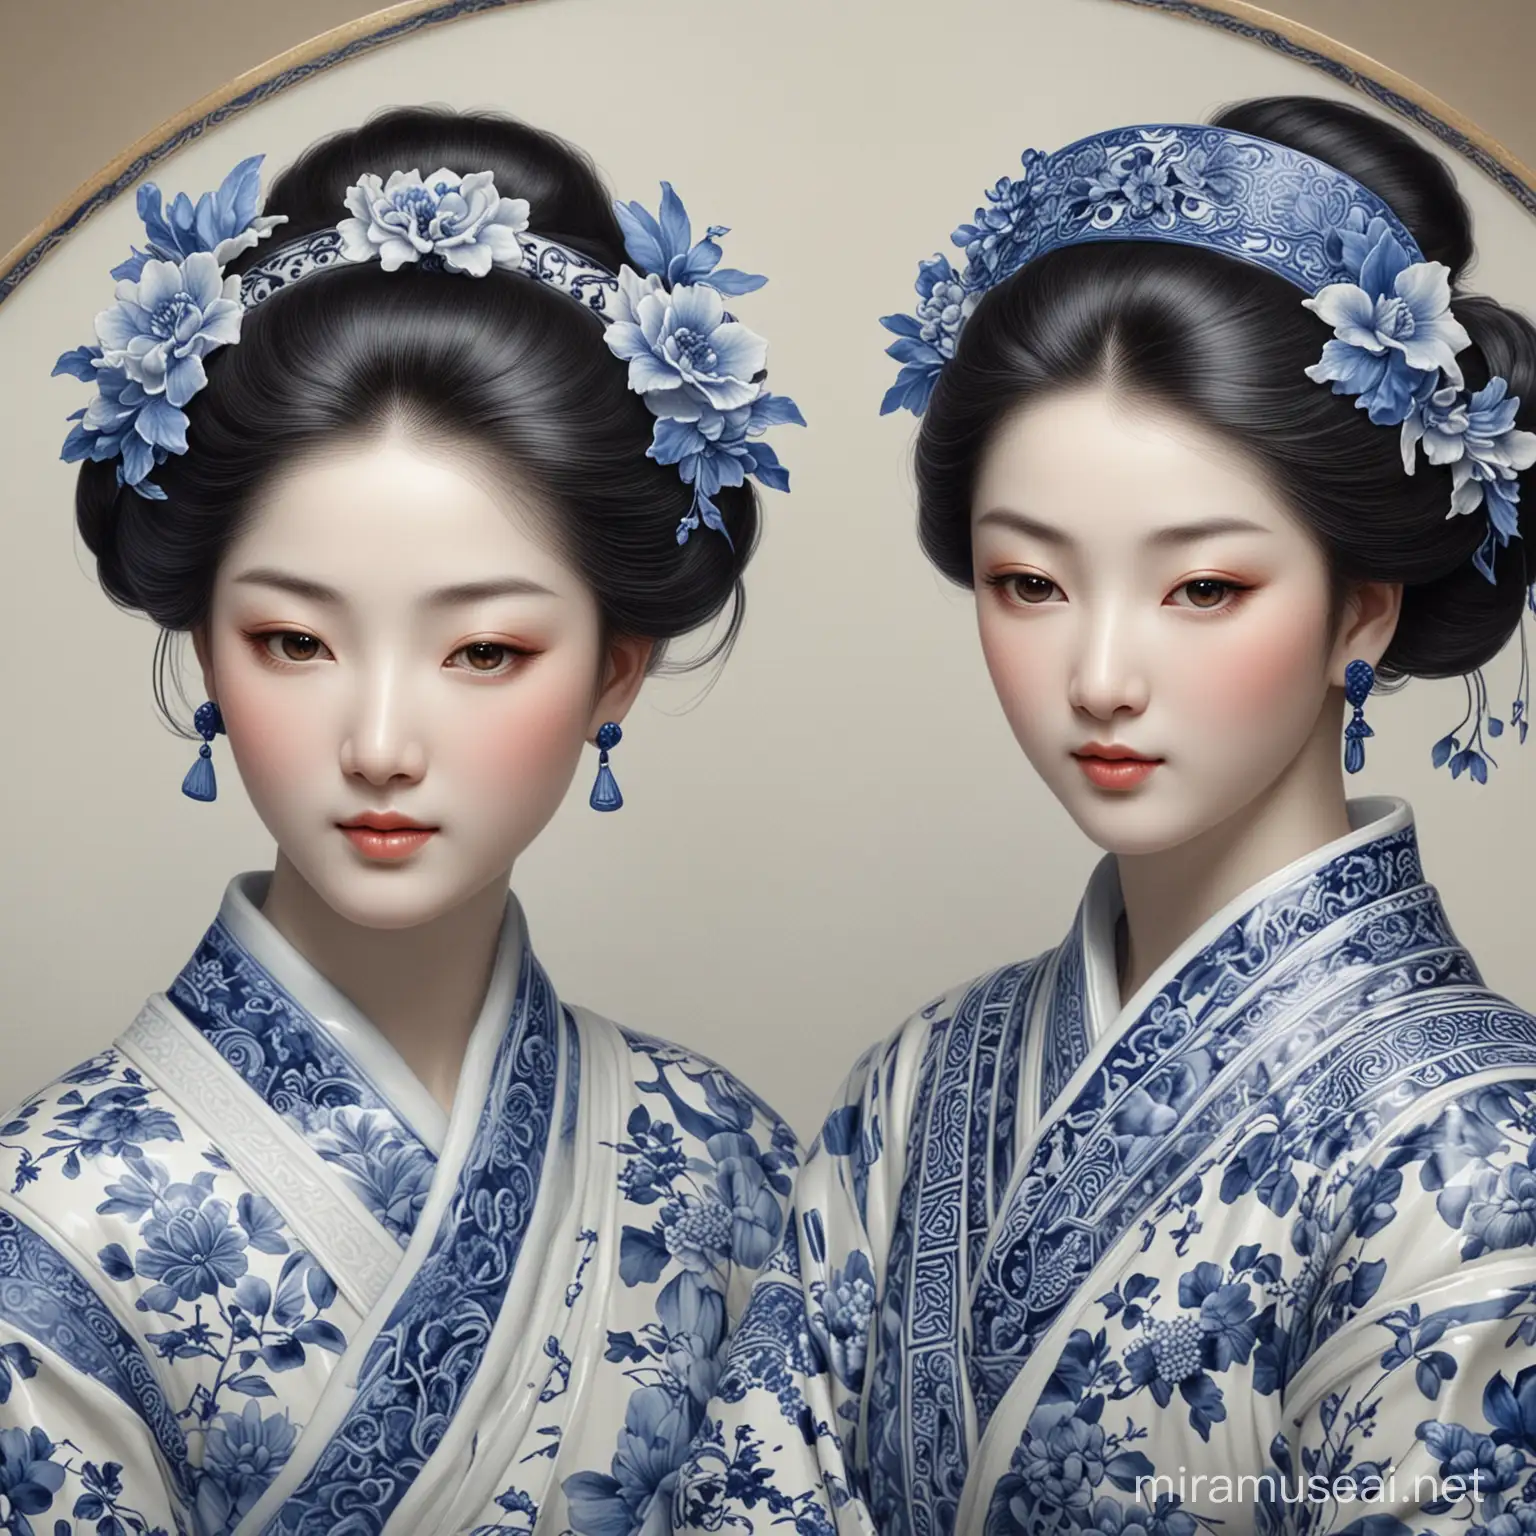 Blue and white porcelain artwork, ancient oriental beauties